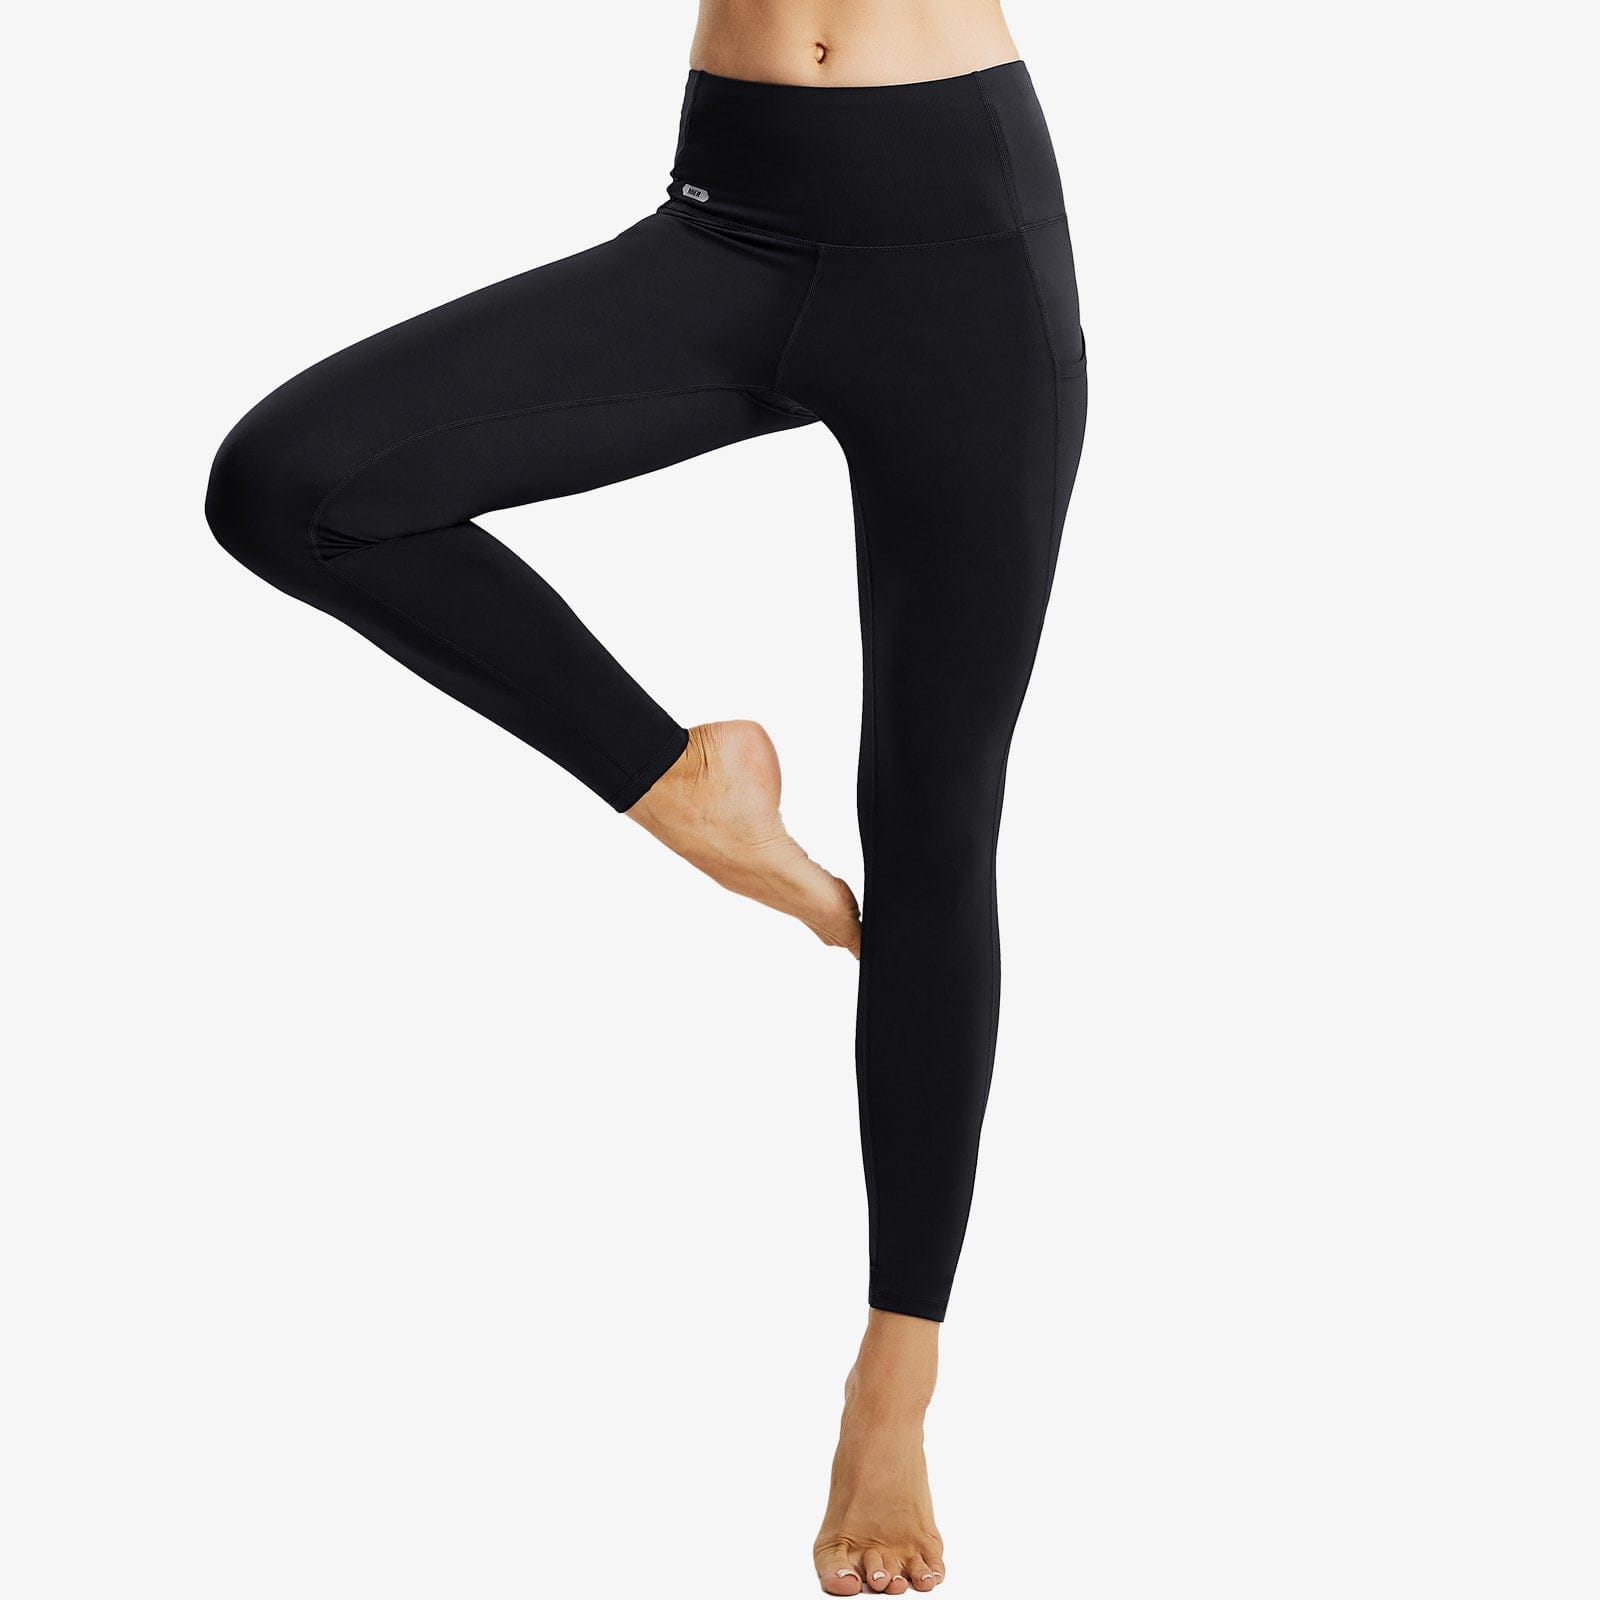 Women's High Waist Yoga Pants with Pockets, Full Length - Black / S